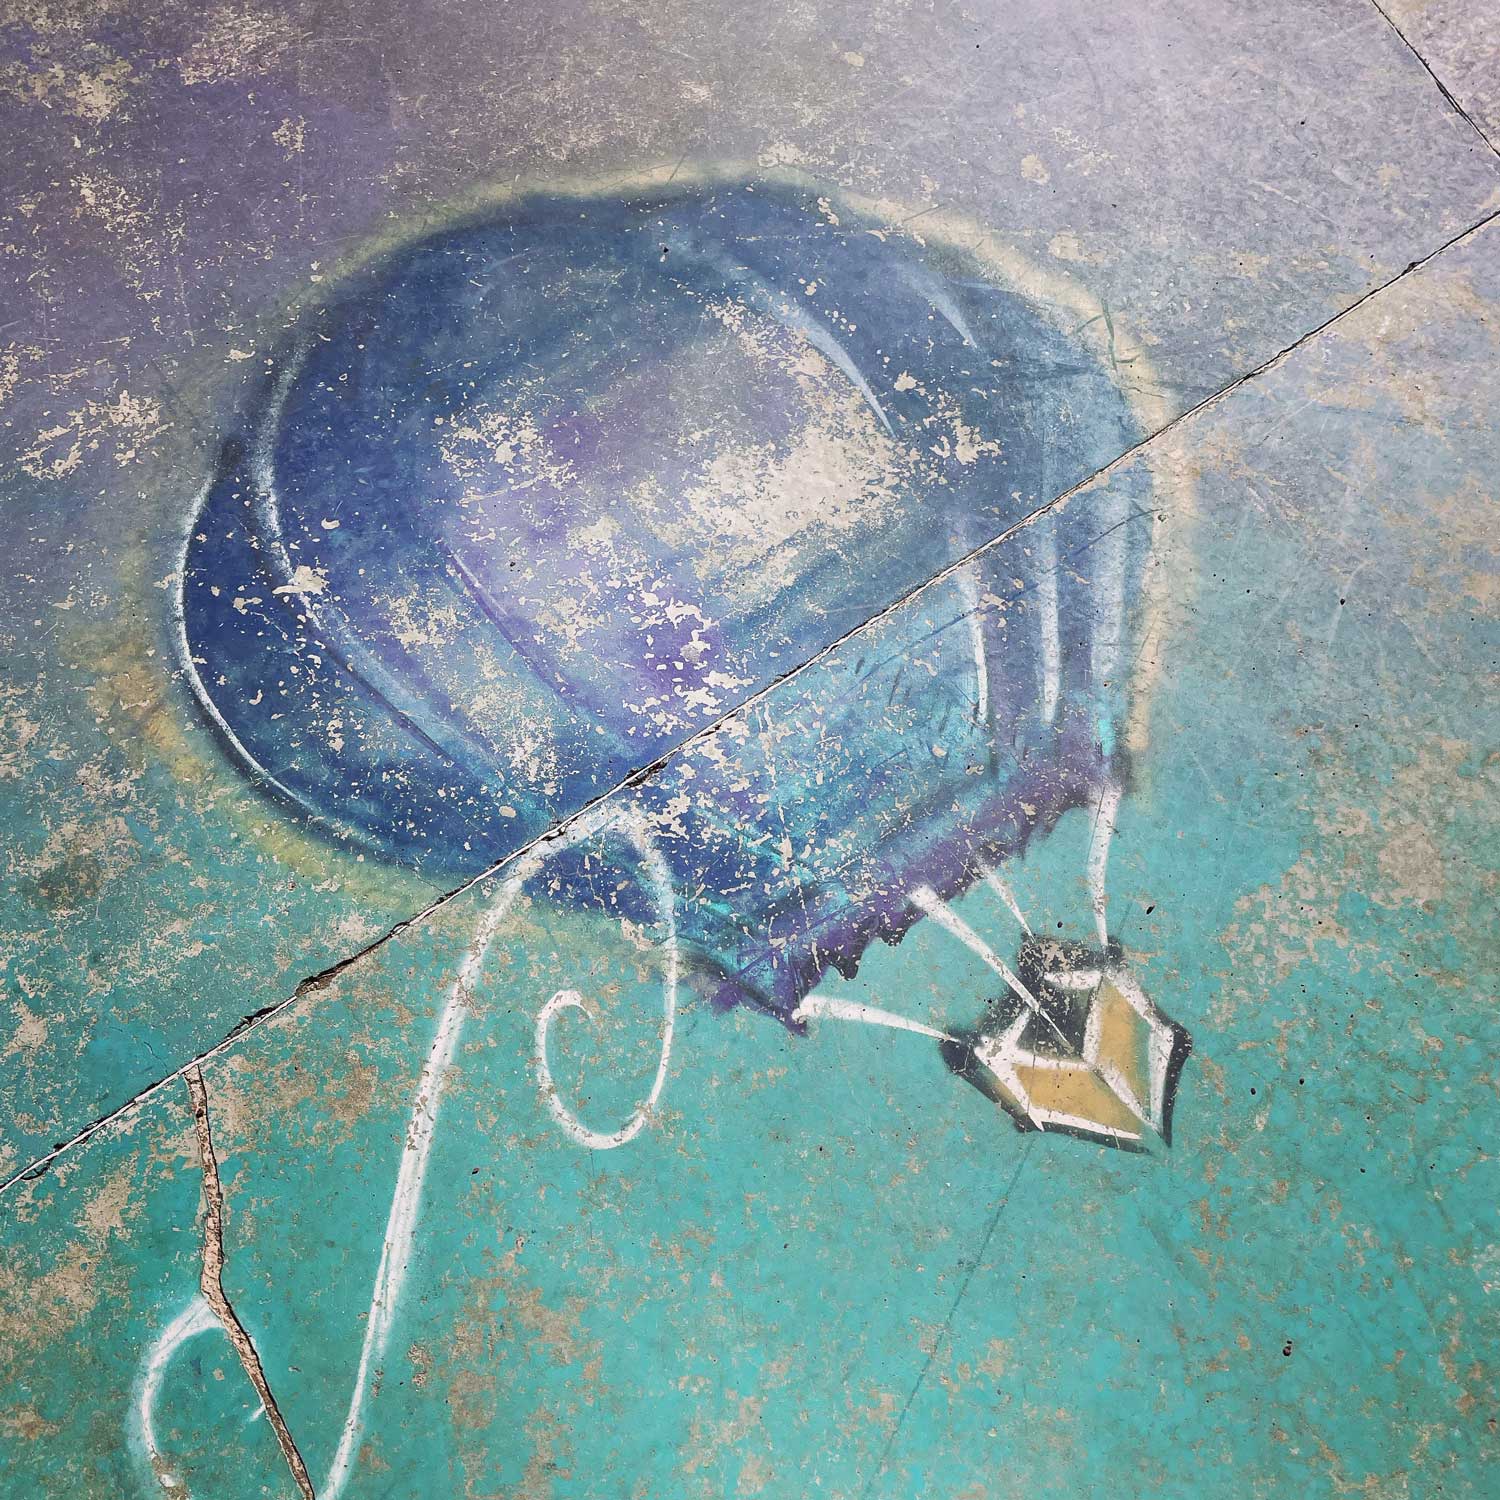 Chalk art of a hot air balloon.